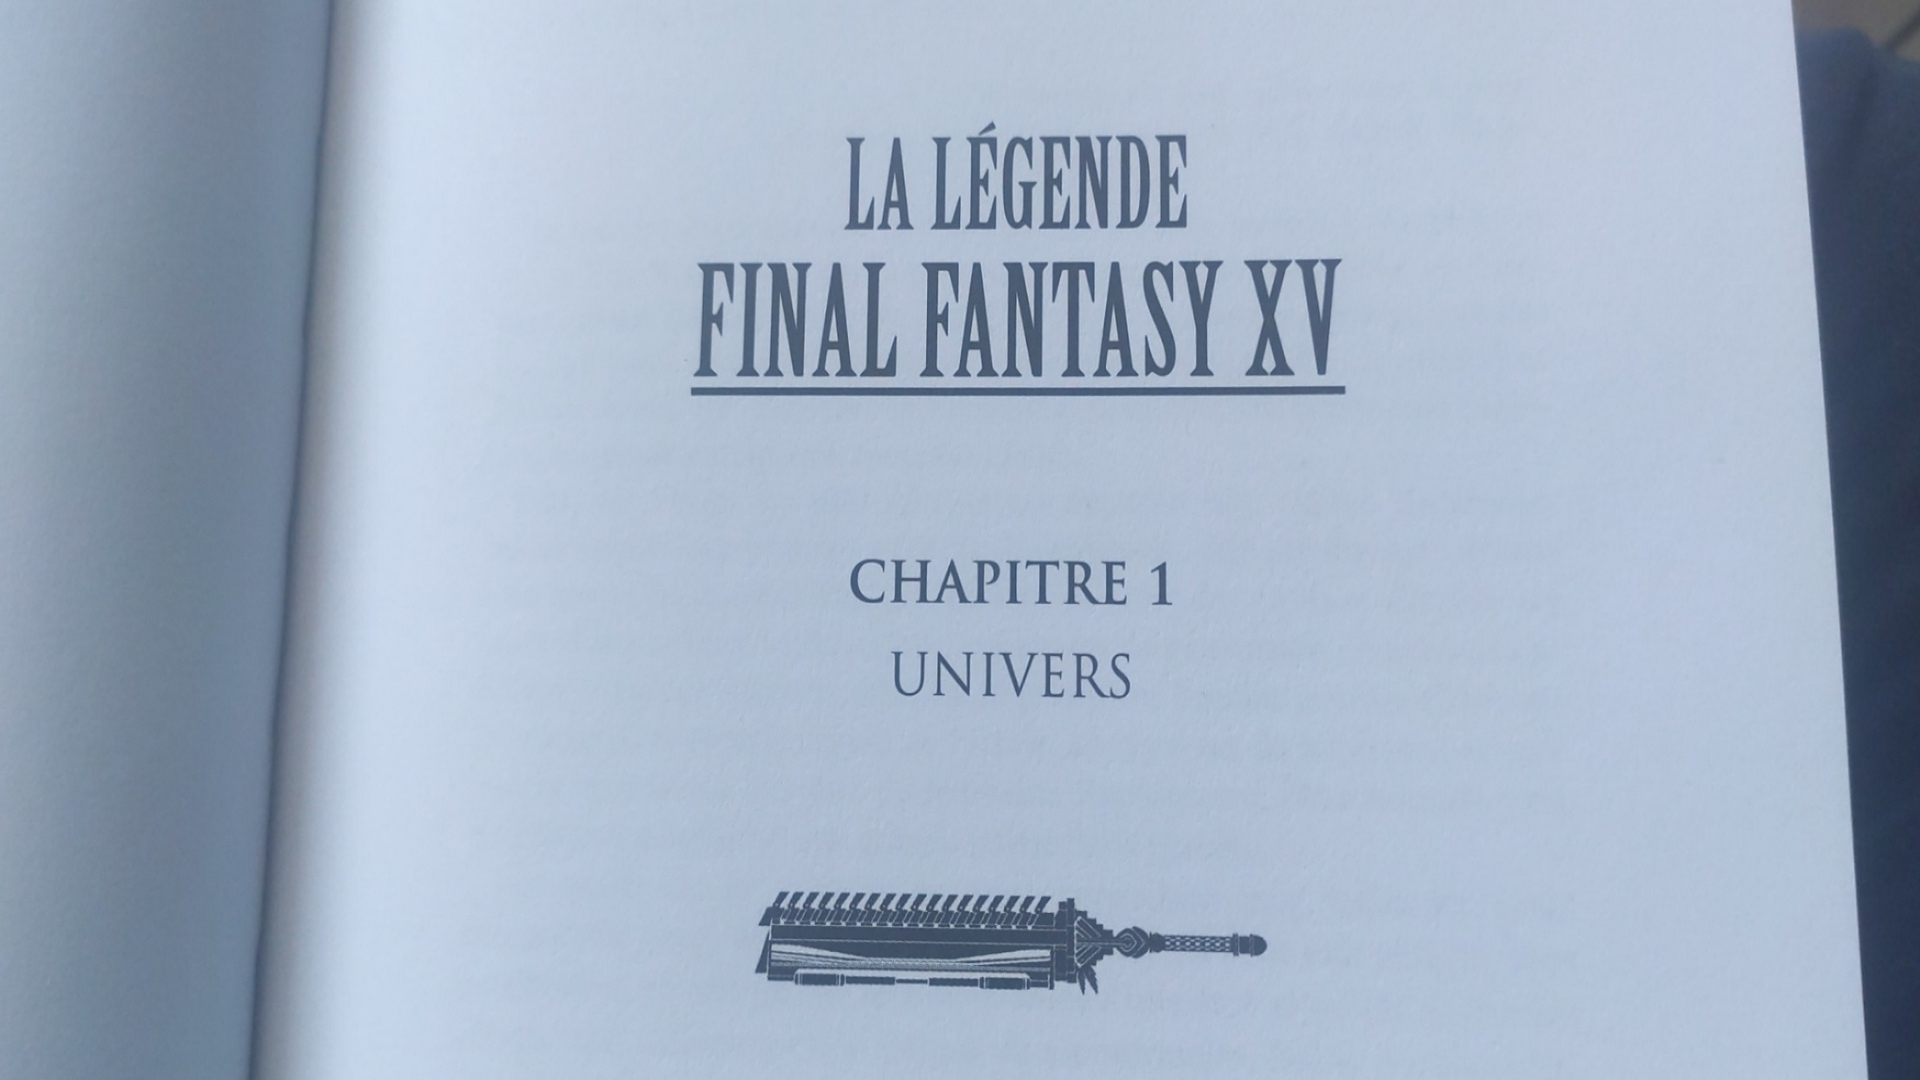 La légende final fantasy xv chapitre 1